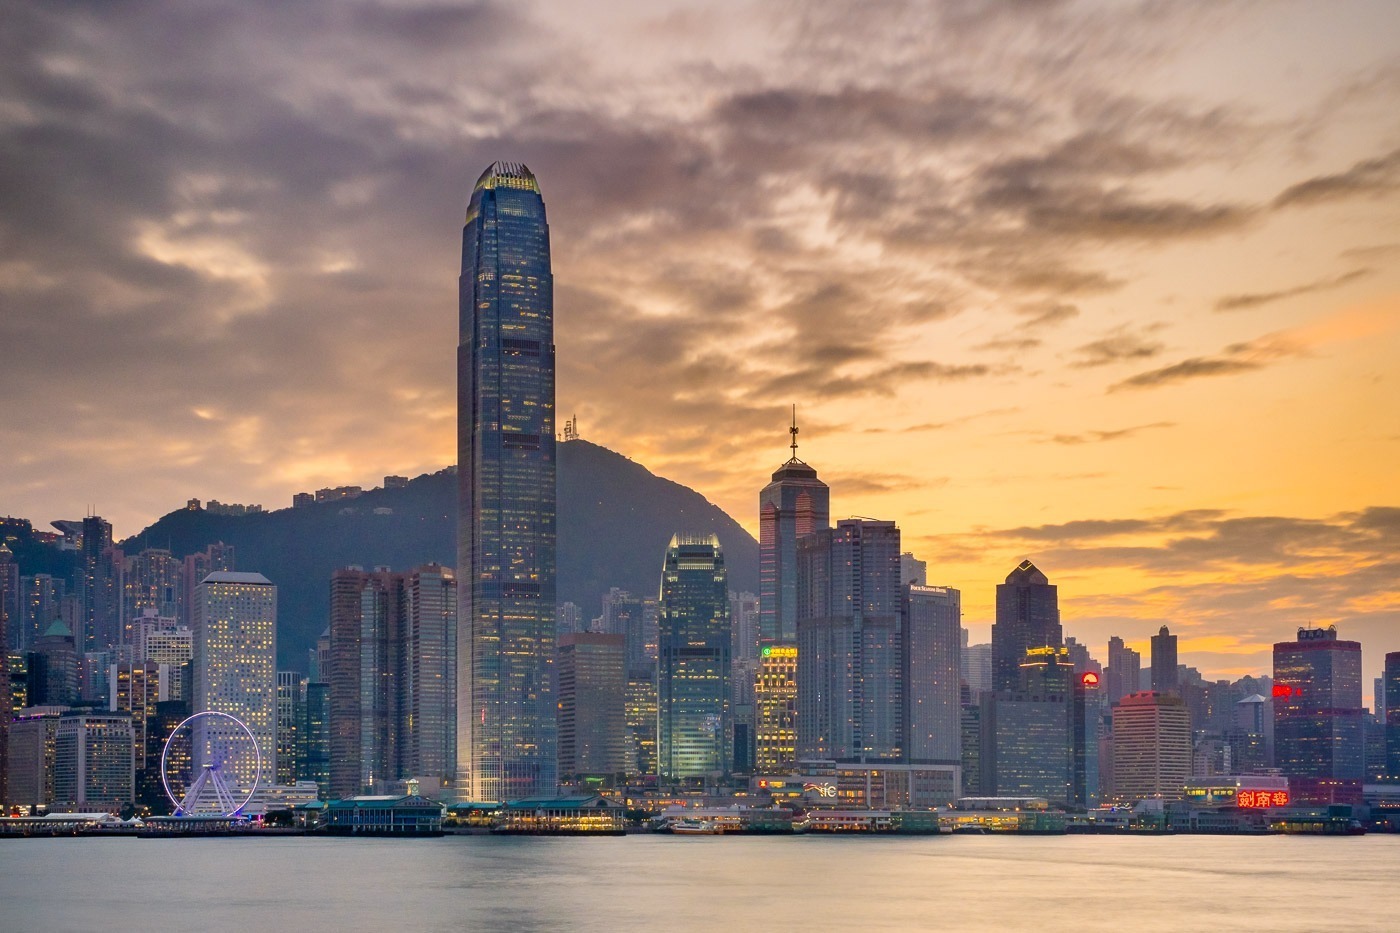 Hong Kong skyline, skyscrapers on Hong Kong Island skyline at sunset